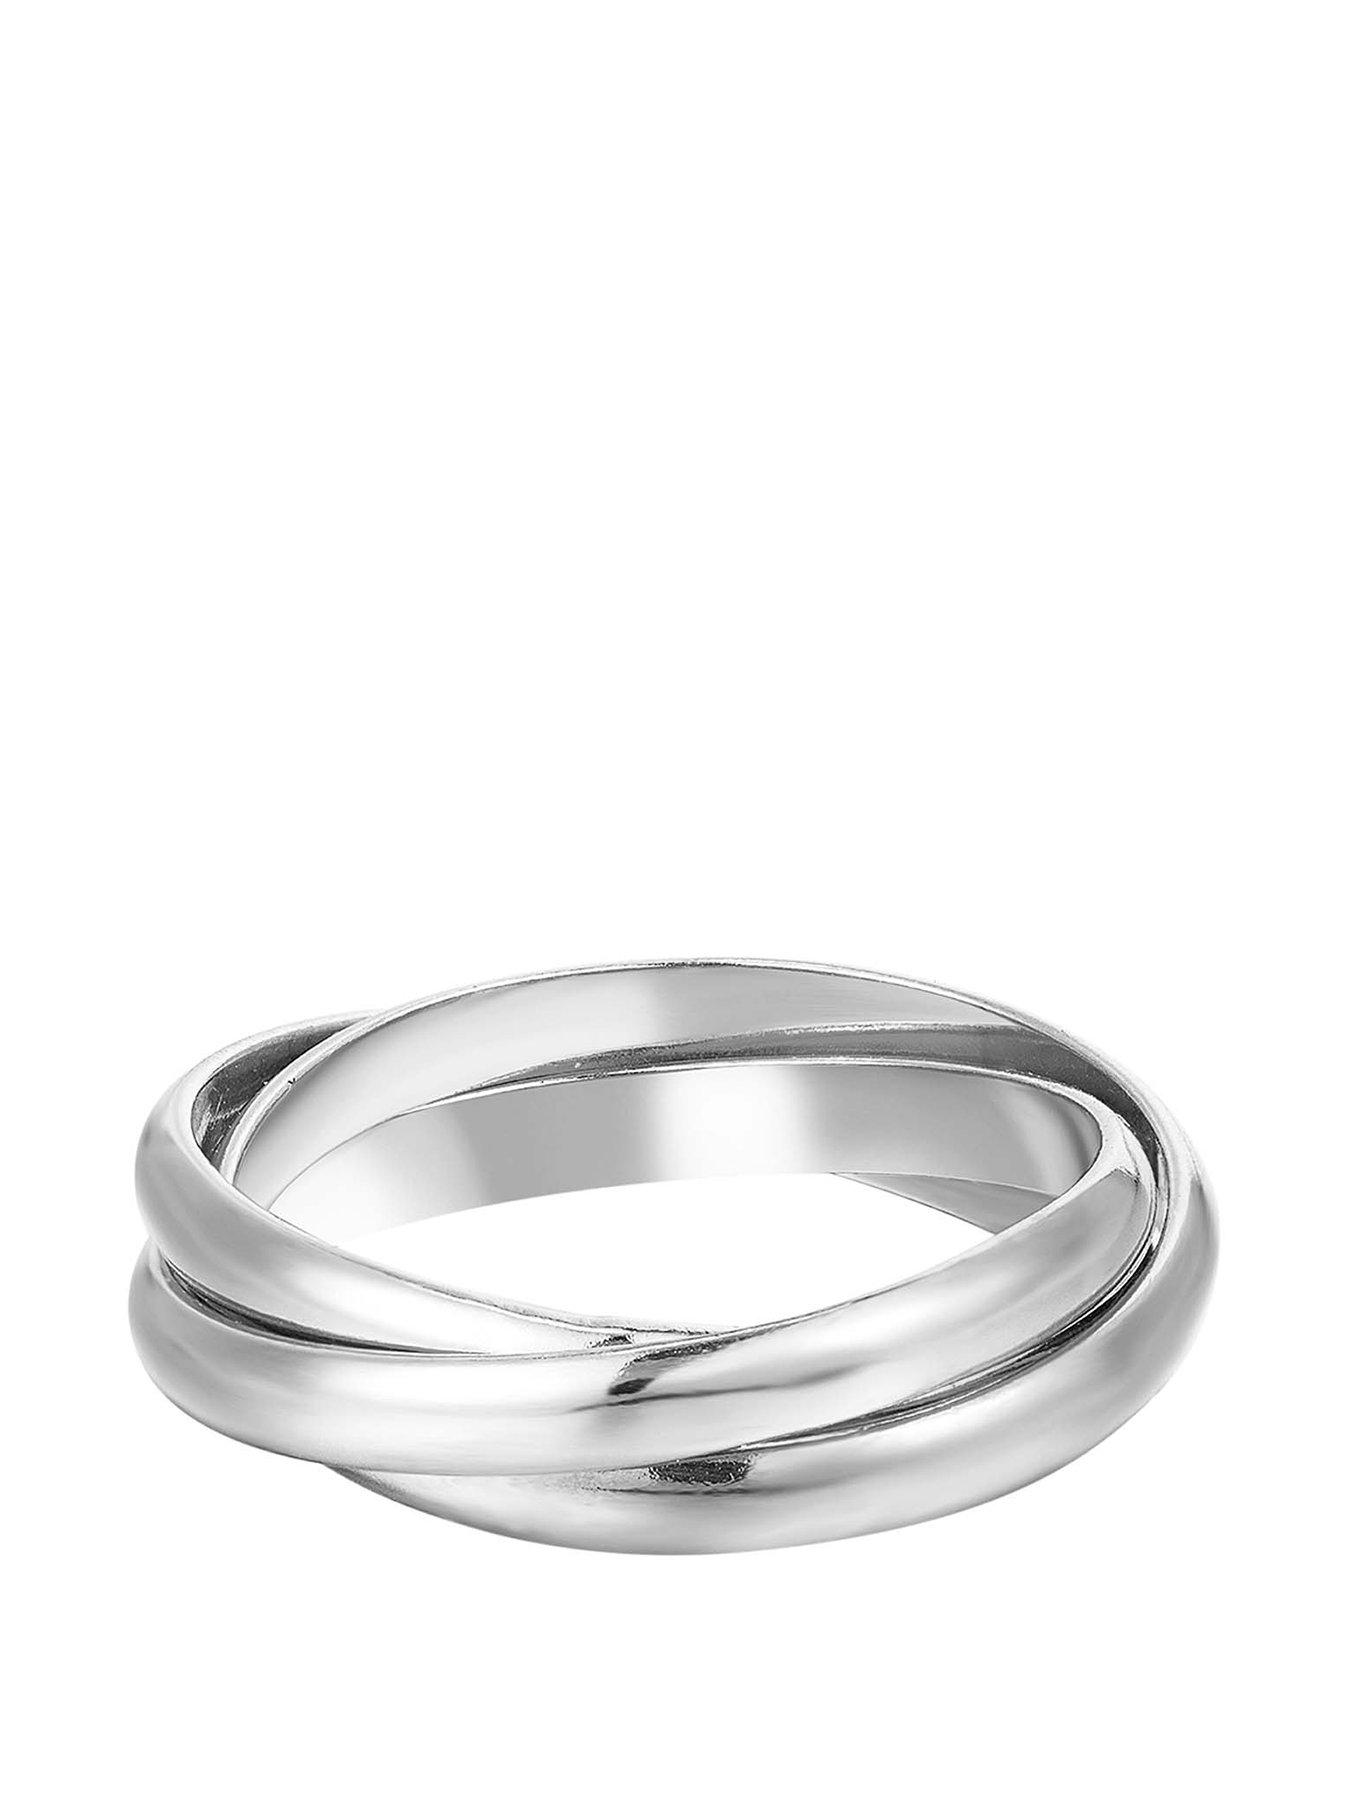 Buy Engagement Rings in Ireland | Paul Sheeran Jewellers